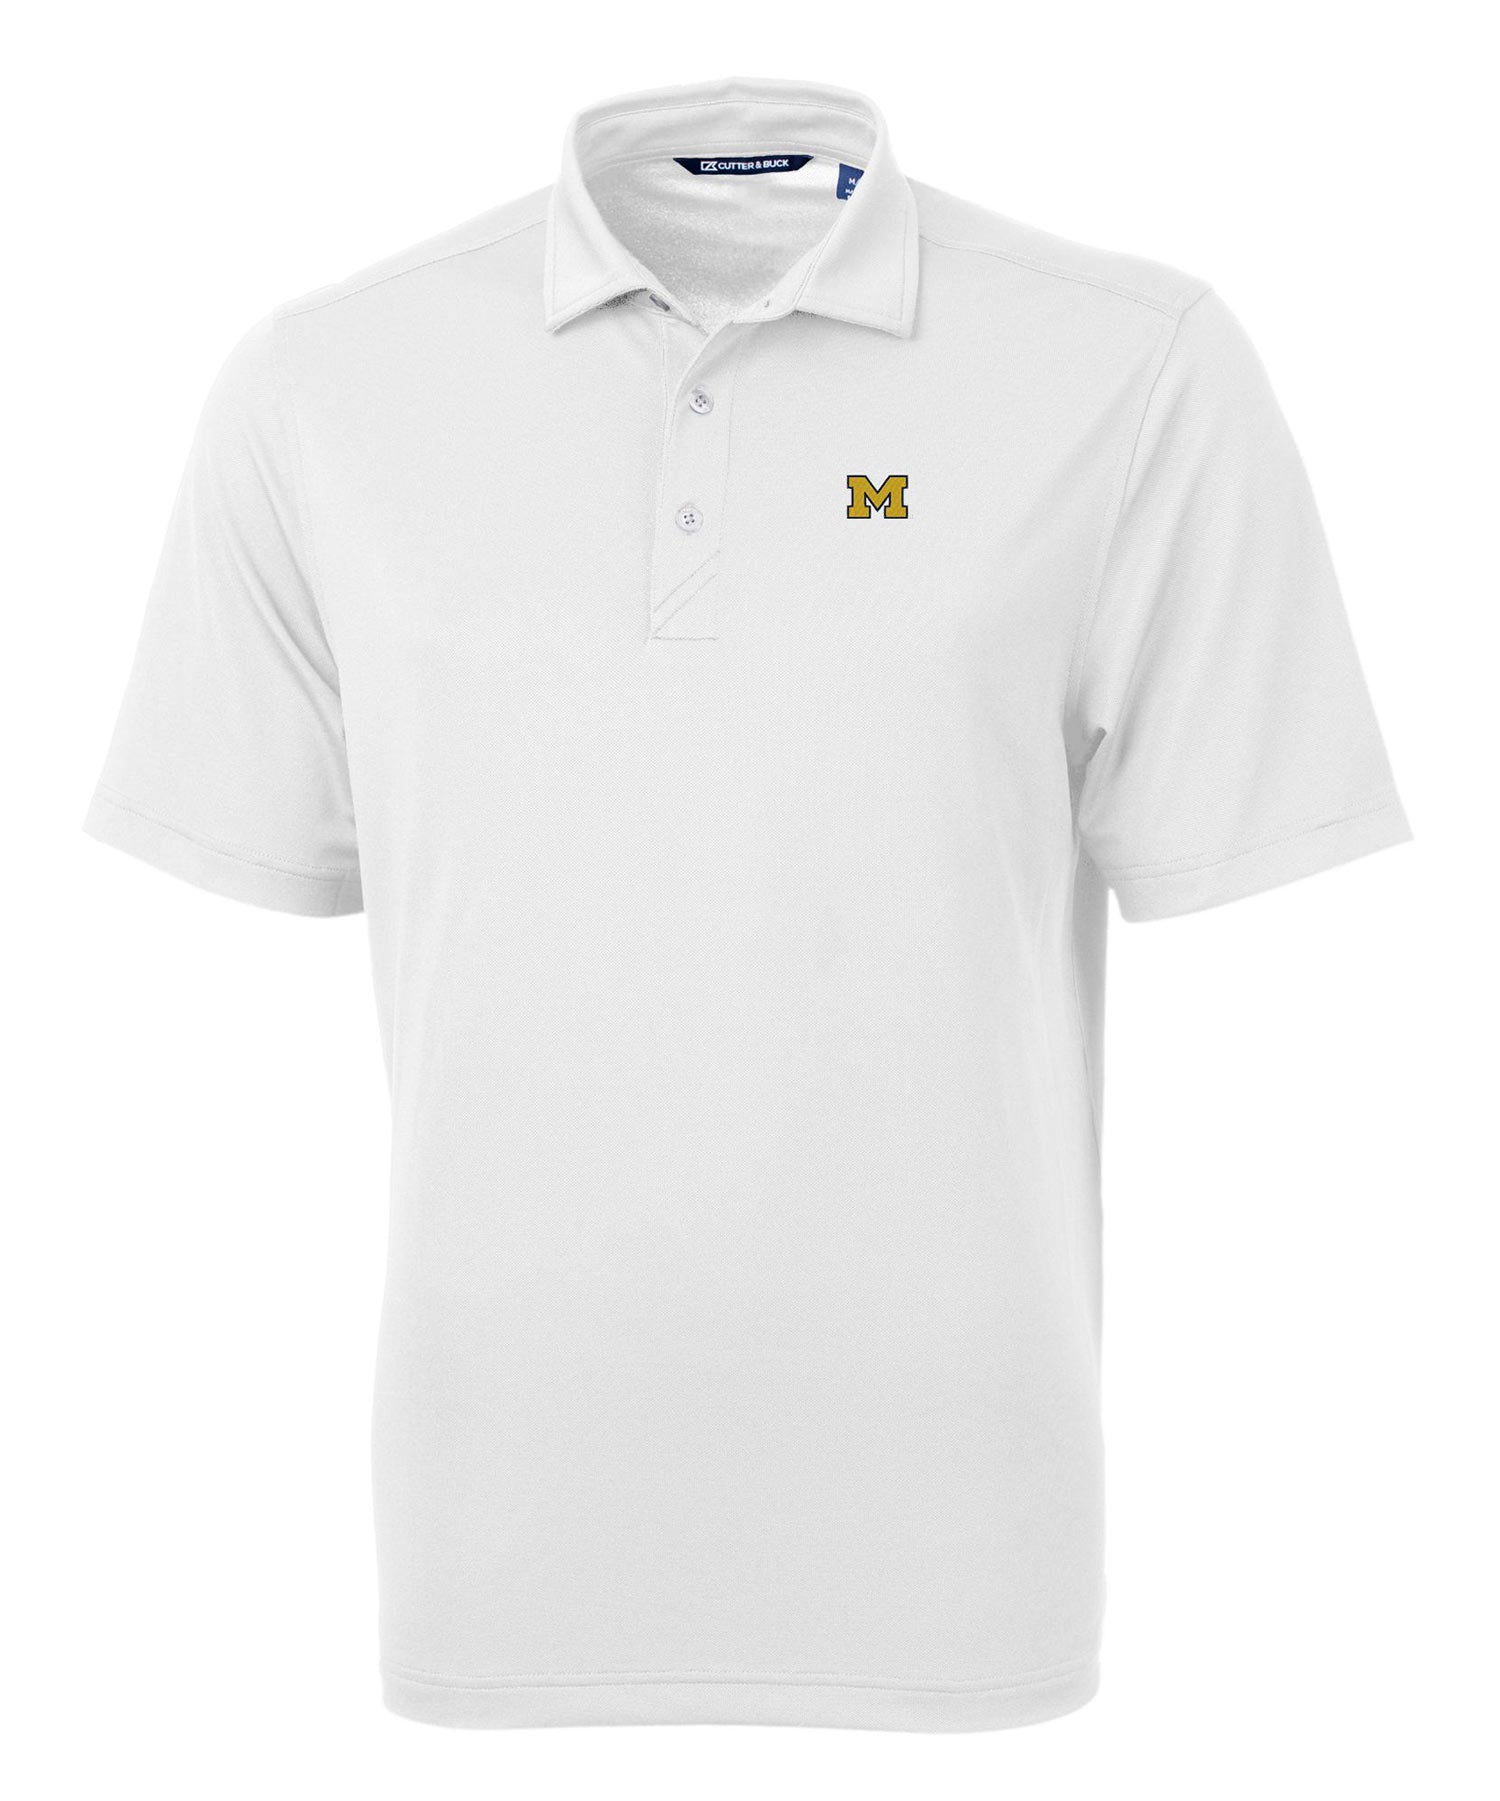 Cutter & Buck University of Michigan Wolverines Short Sleeve Polo Knit Shirt, Men's Big & Tall